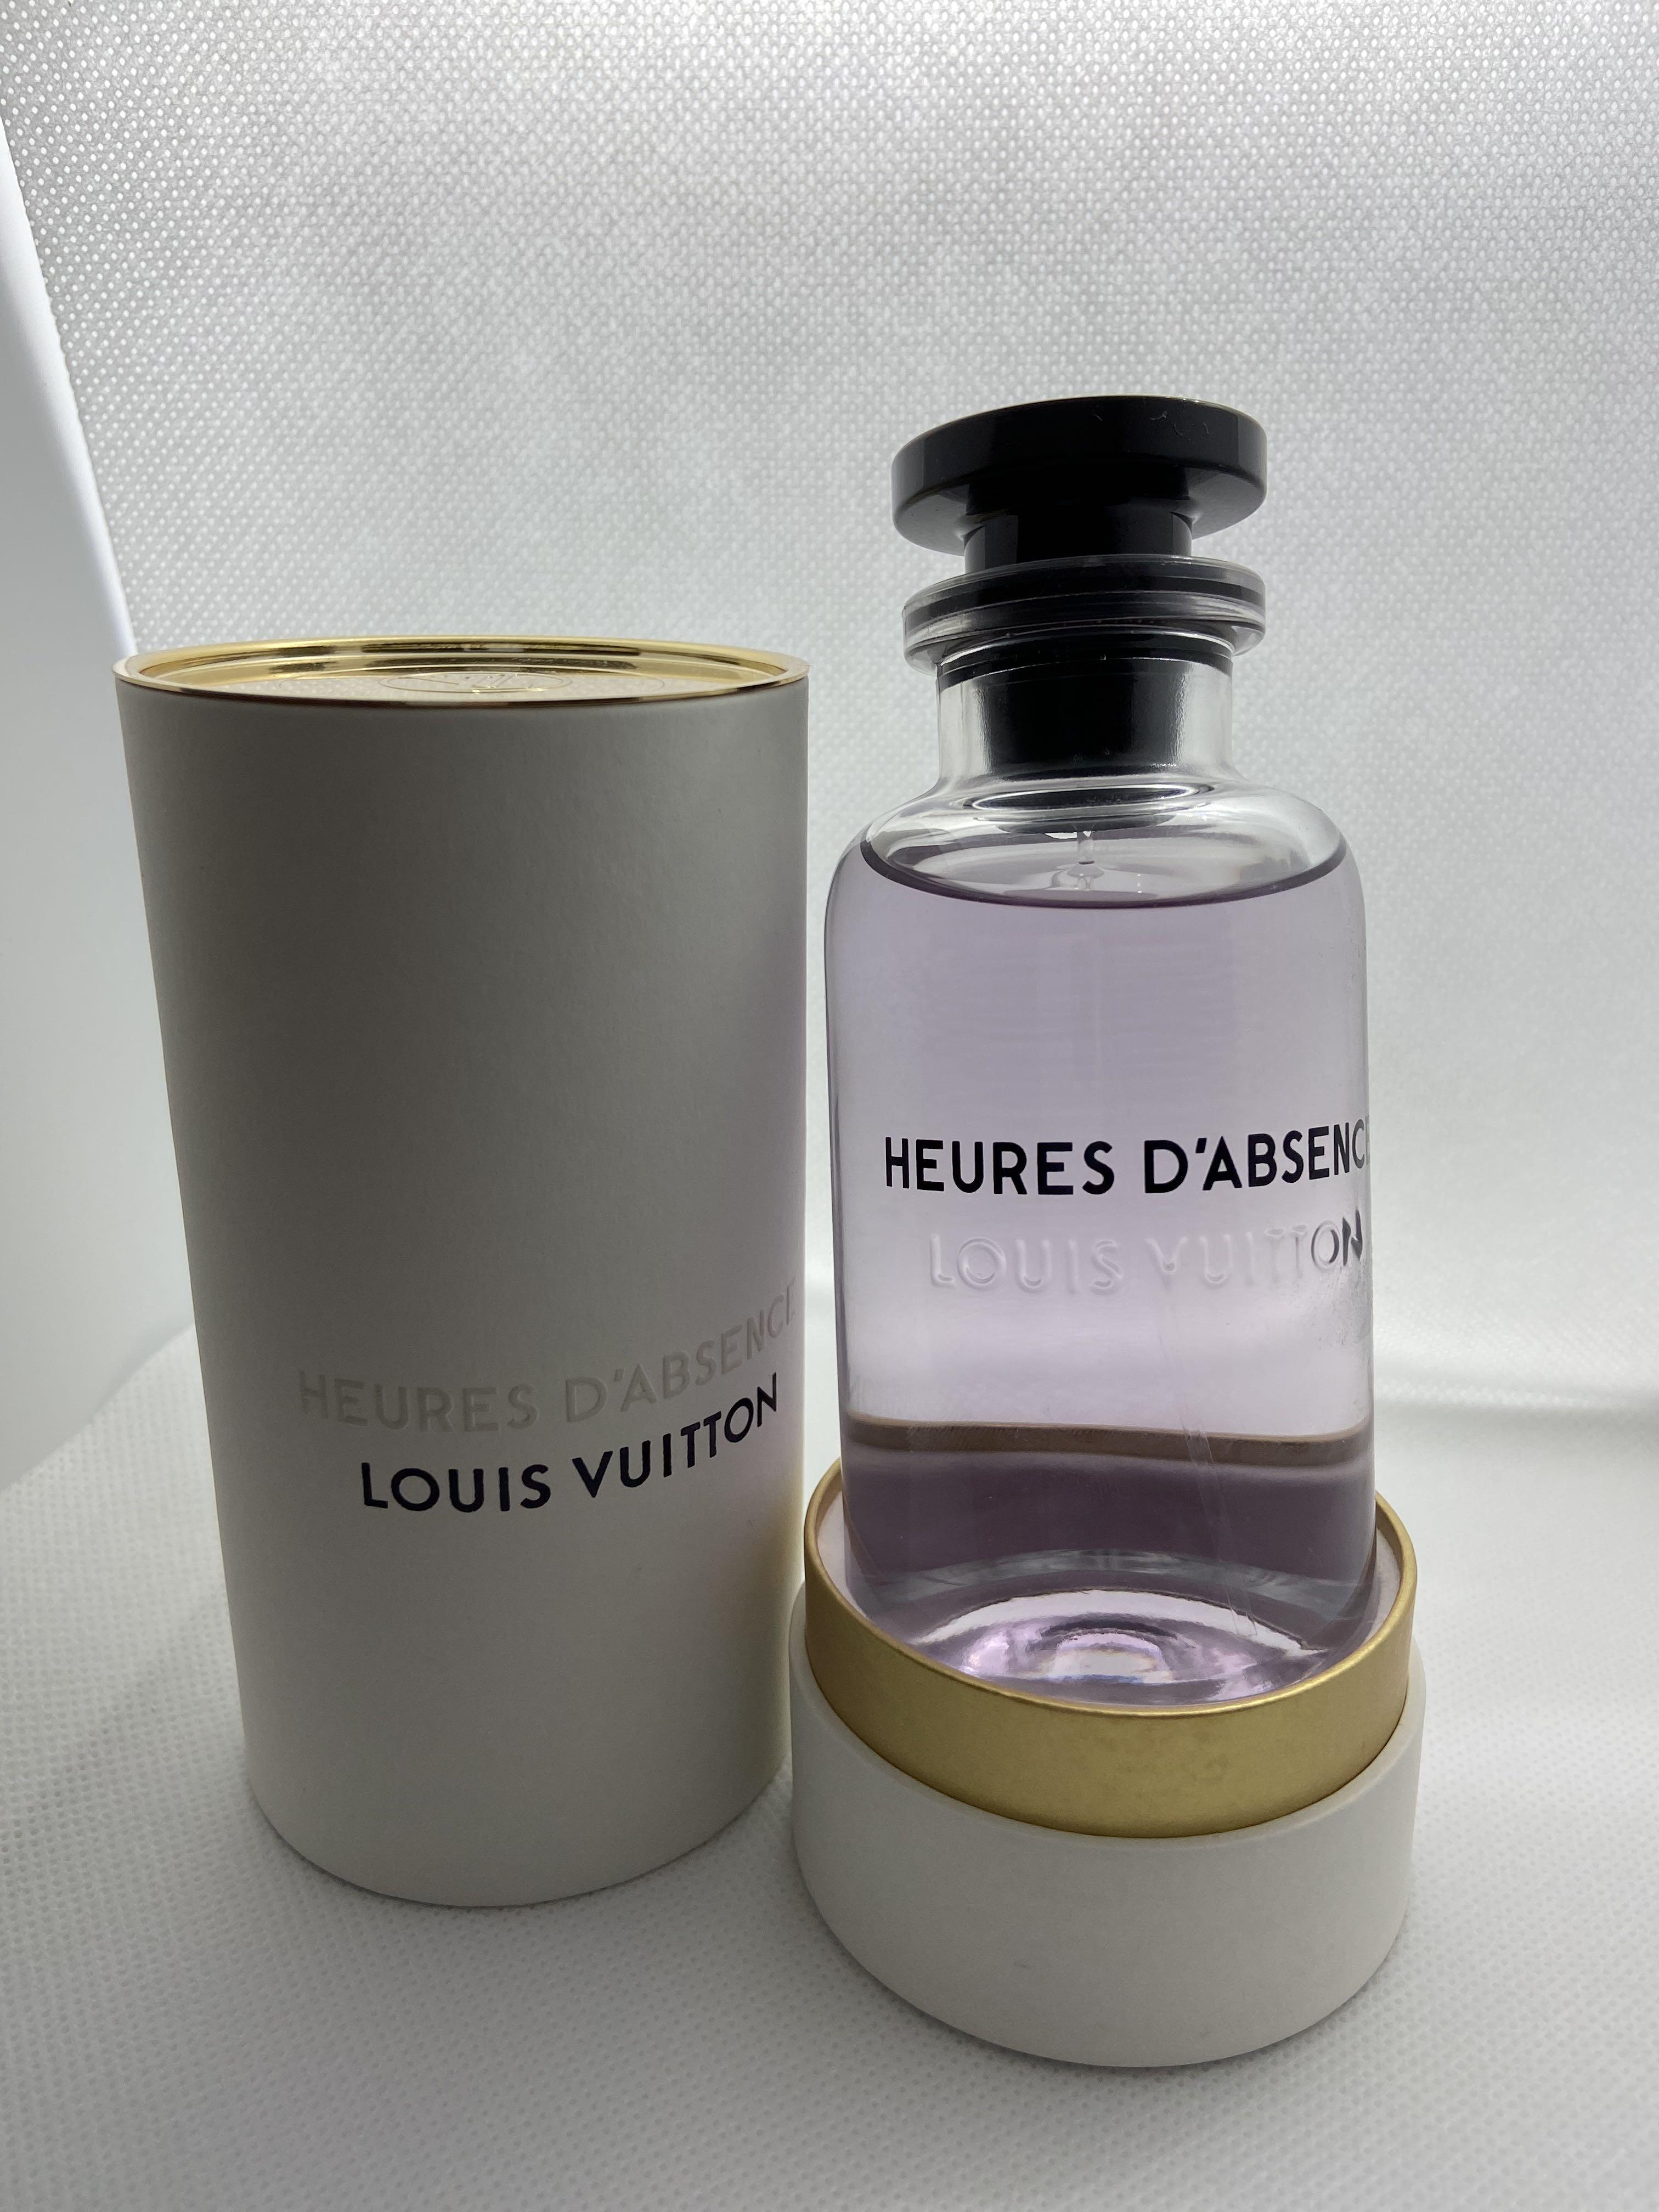 ORIGINAL] LOUIS VUITTON STELLAR TIMES EXTRAIT DE PARFUM 100ML FOR UNISEX,  Beauty & Personal Care, Fragrance & Deodorants on Carousell